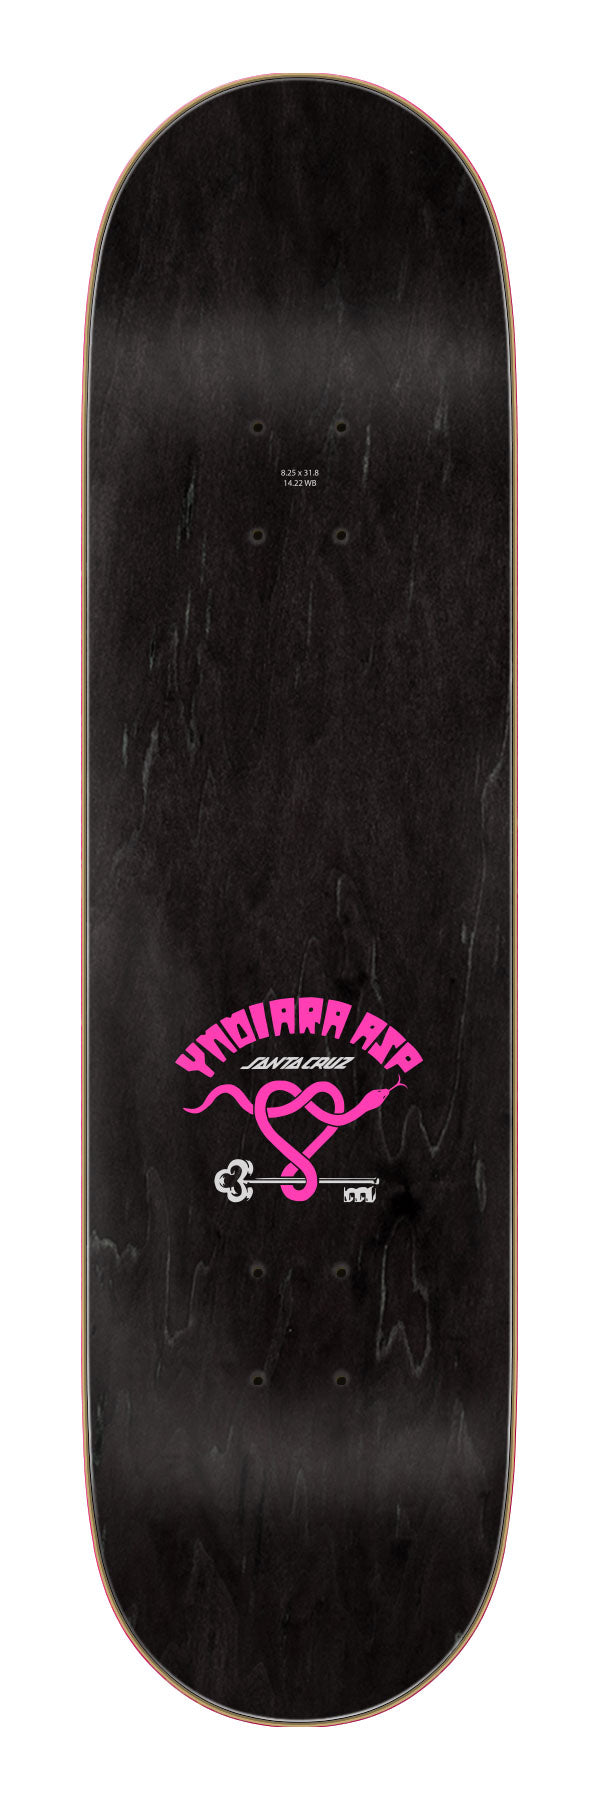 Asp Slither Twin Pro Skateboard Deck 8.25in x 31.83in Santa Cruz